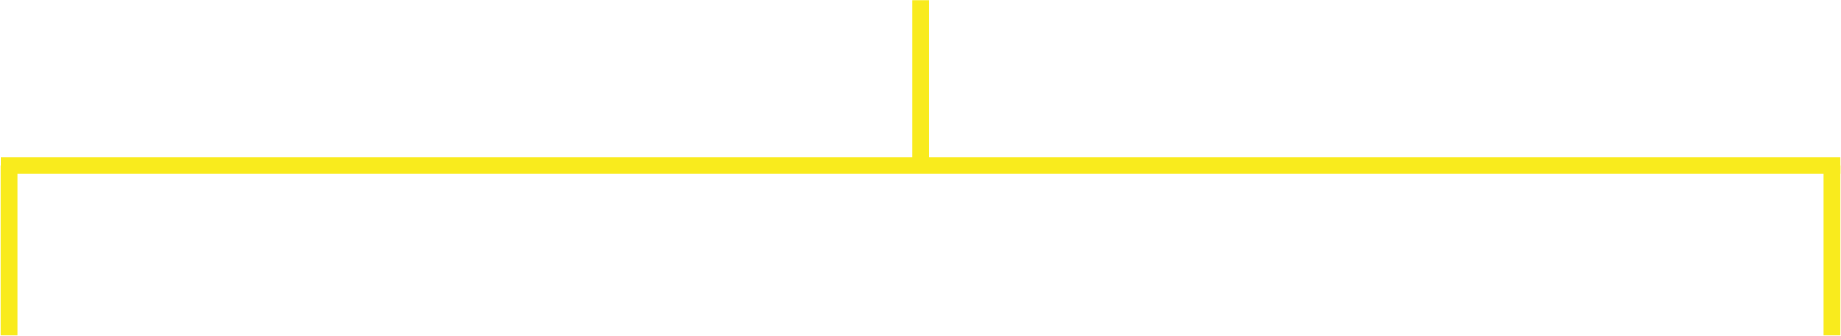 Yellow Lines 3